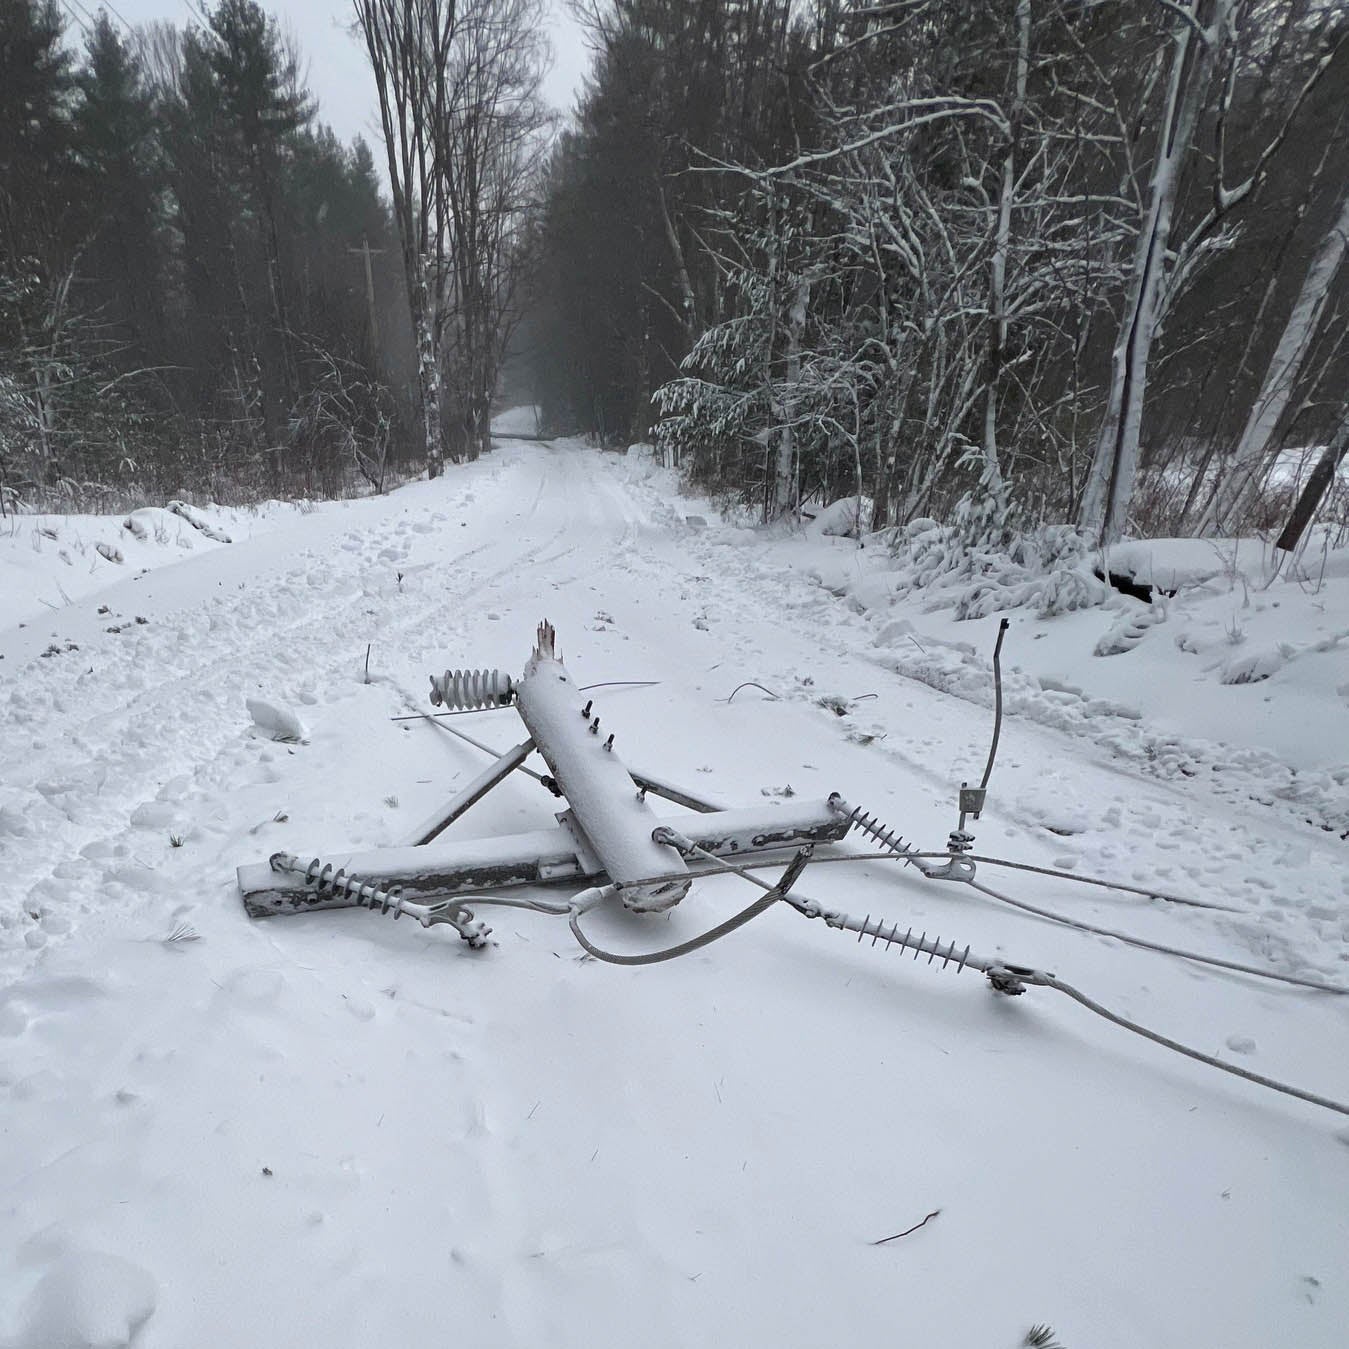 Pole down in New Hampshire